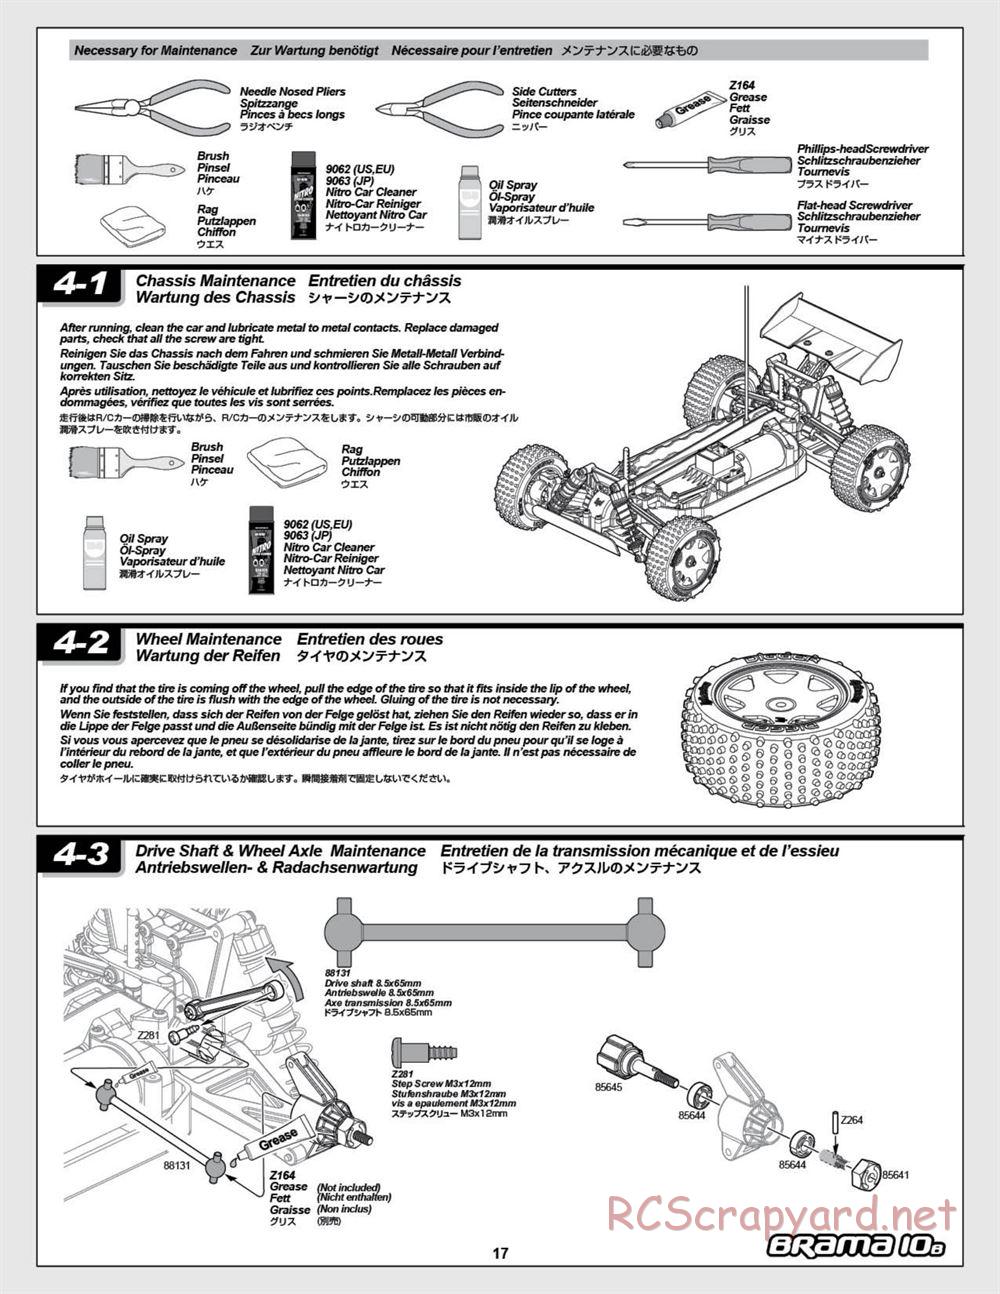 HPI - Brama 10B - Manual - Page 17